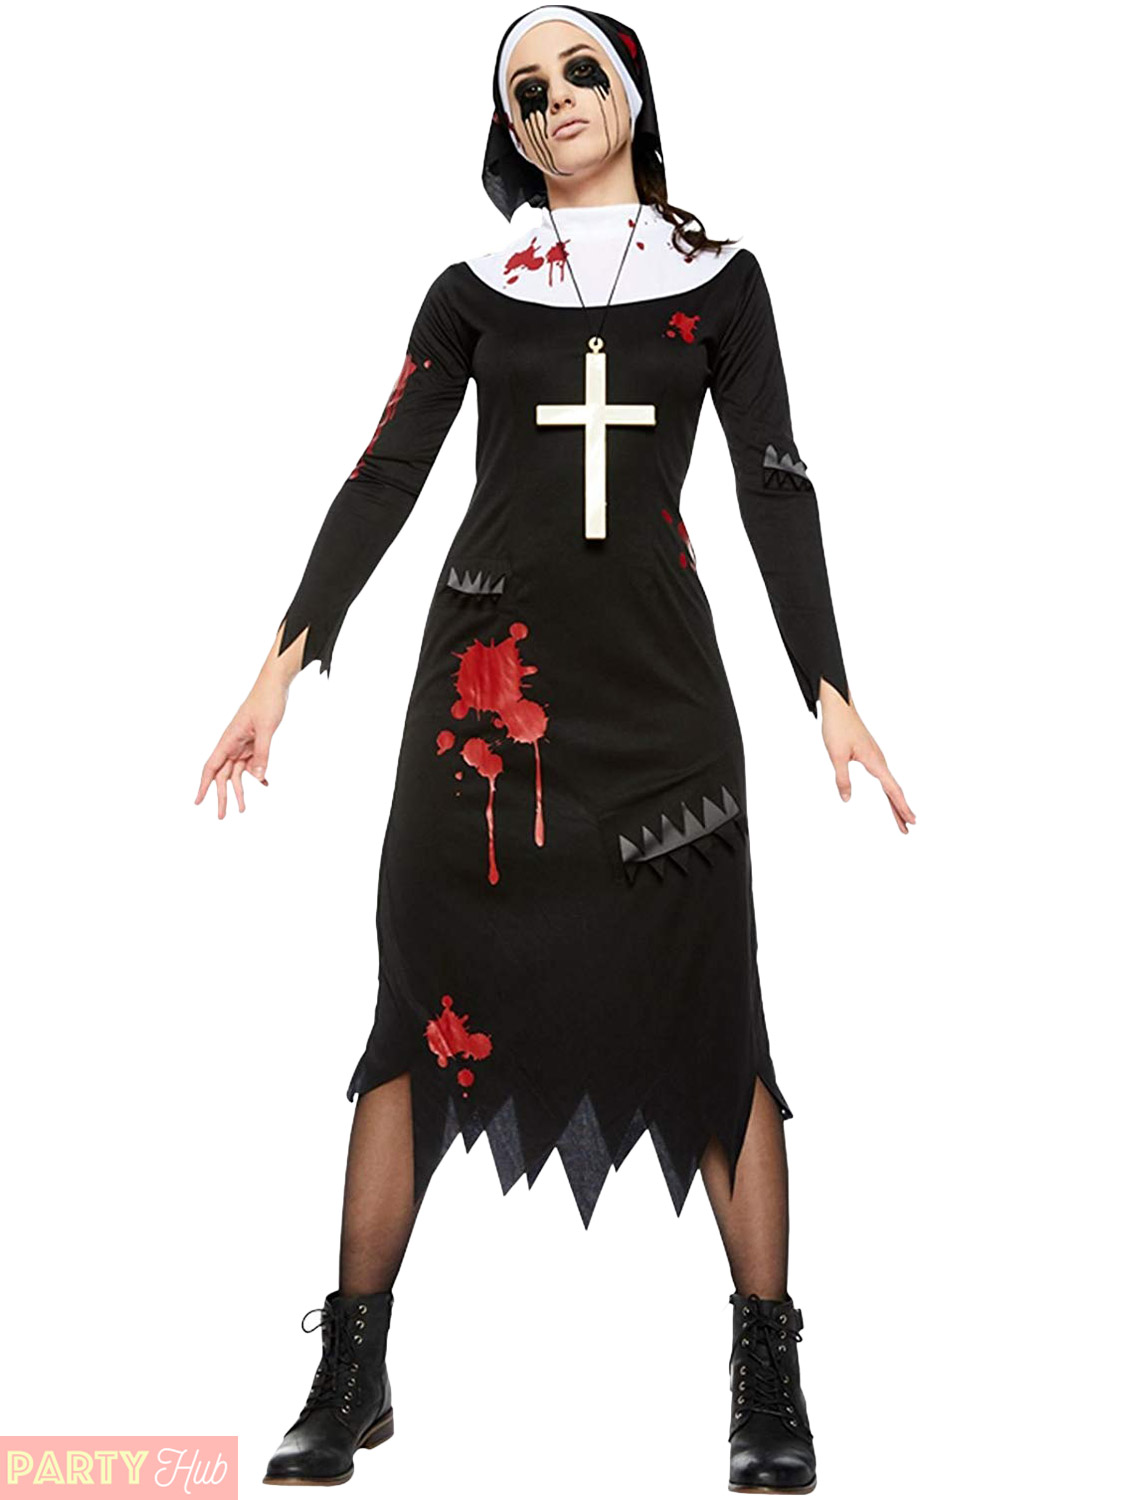 Nun mieux Femme Adulte Religieux Costume Halloween